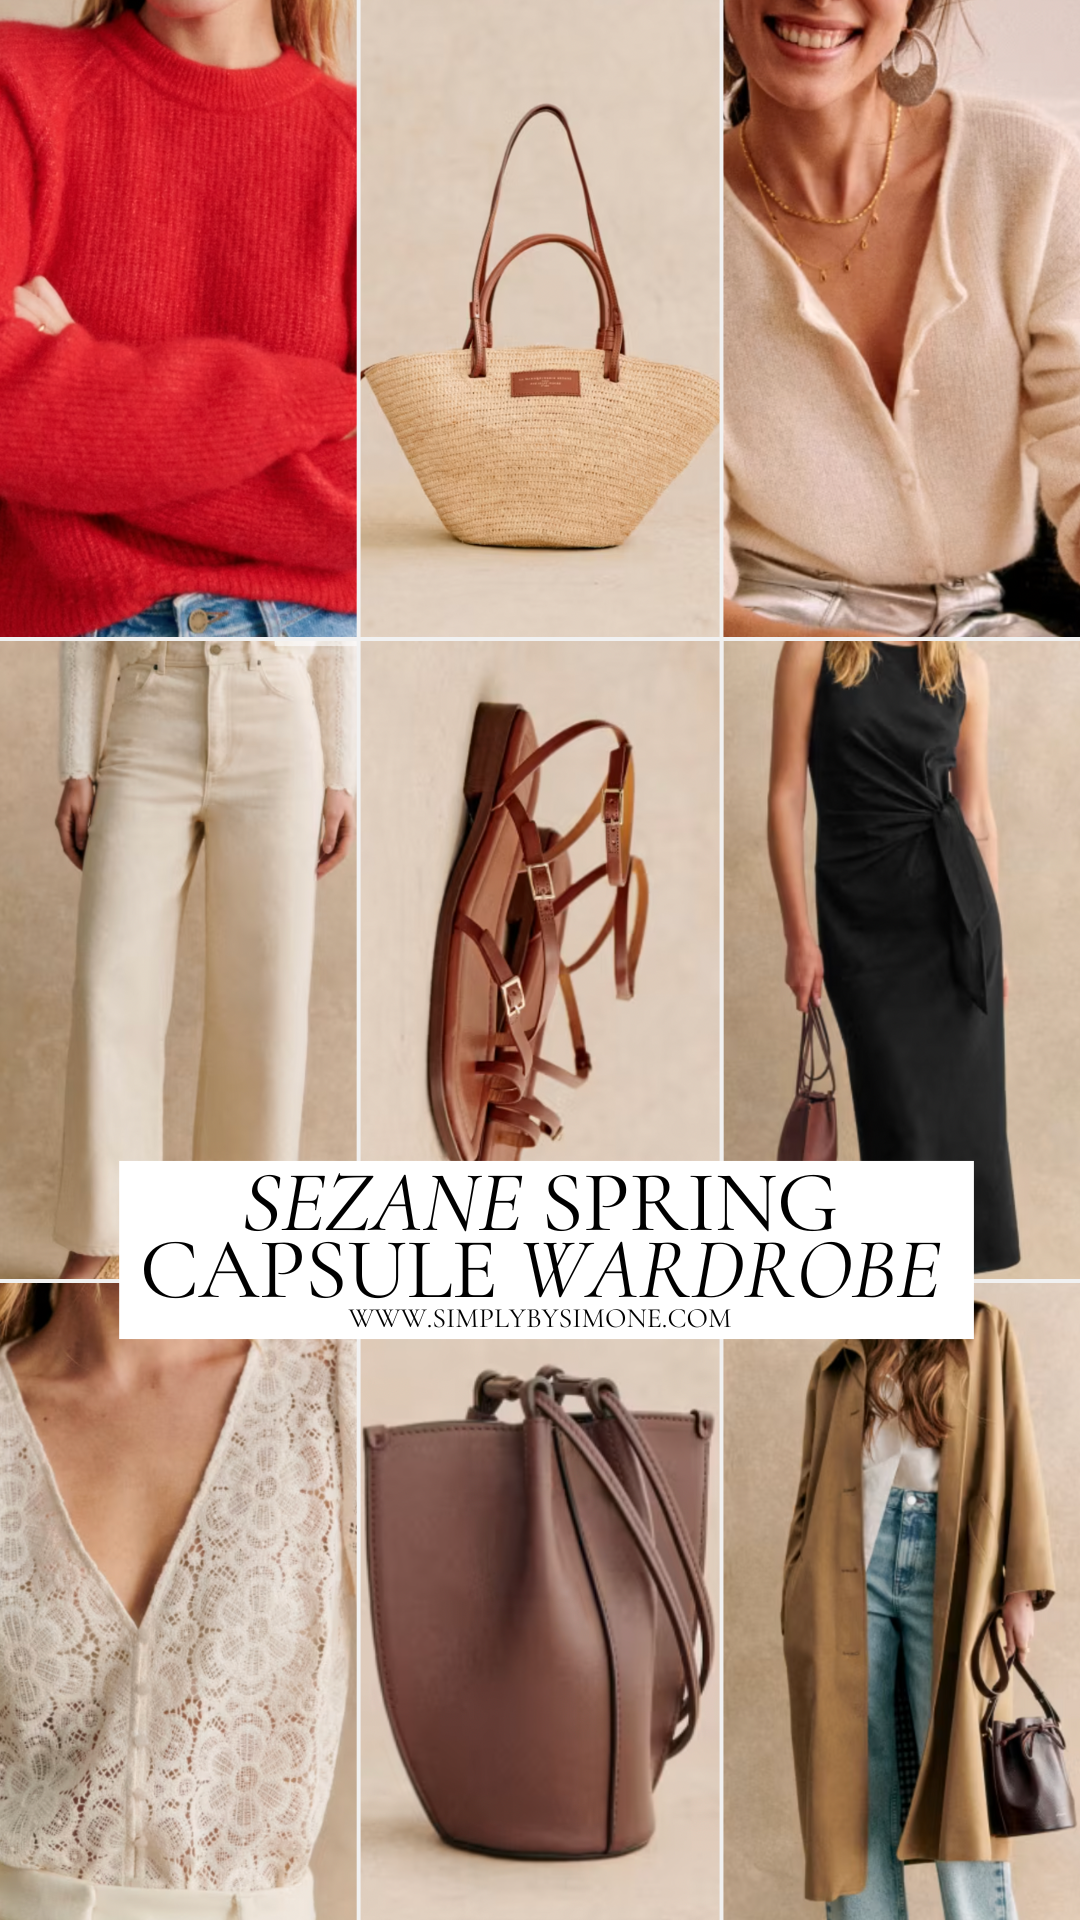 Sezane Spring Capsule Wardrobe Nine Item Cover Image Including Red Sweater, Straw Bag, Cream Cardigan